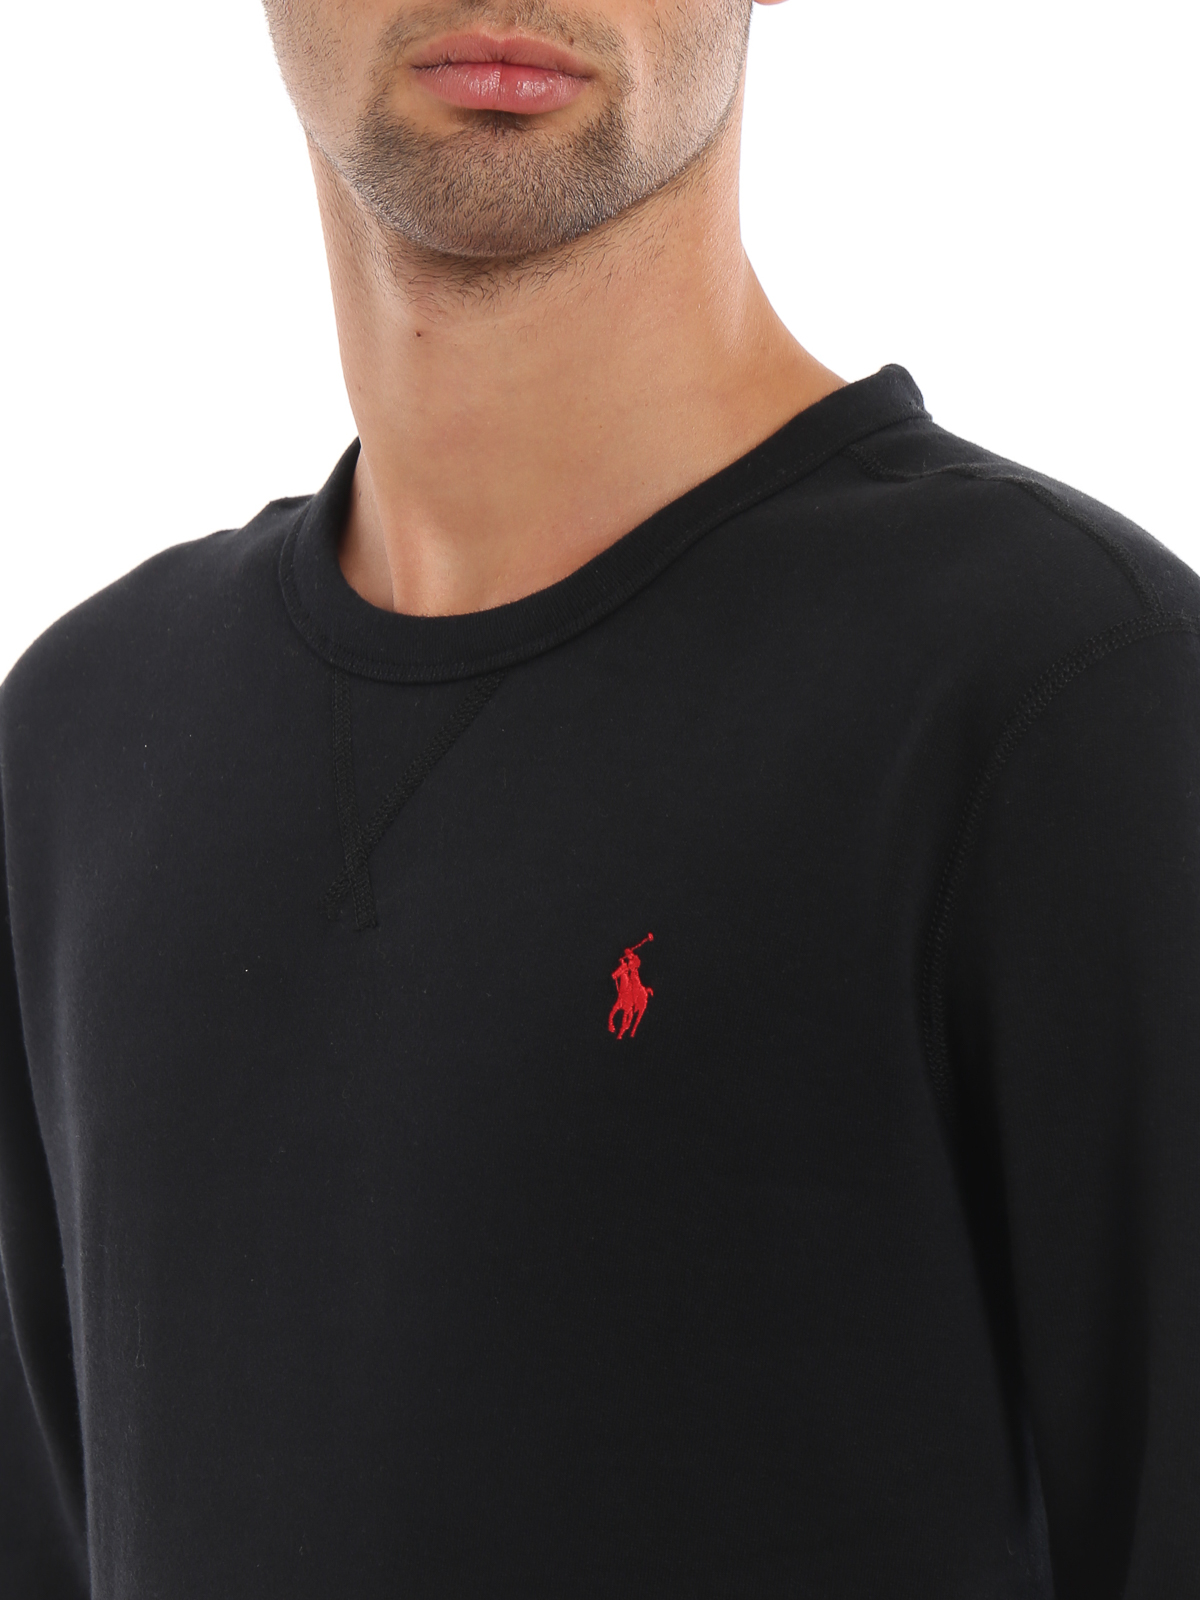 Sweatshirts & Sweaters Polo Ralph Lauren - Black cotton blend sweatshirt -  710766772001